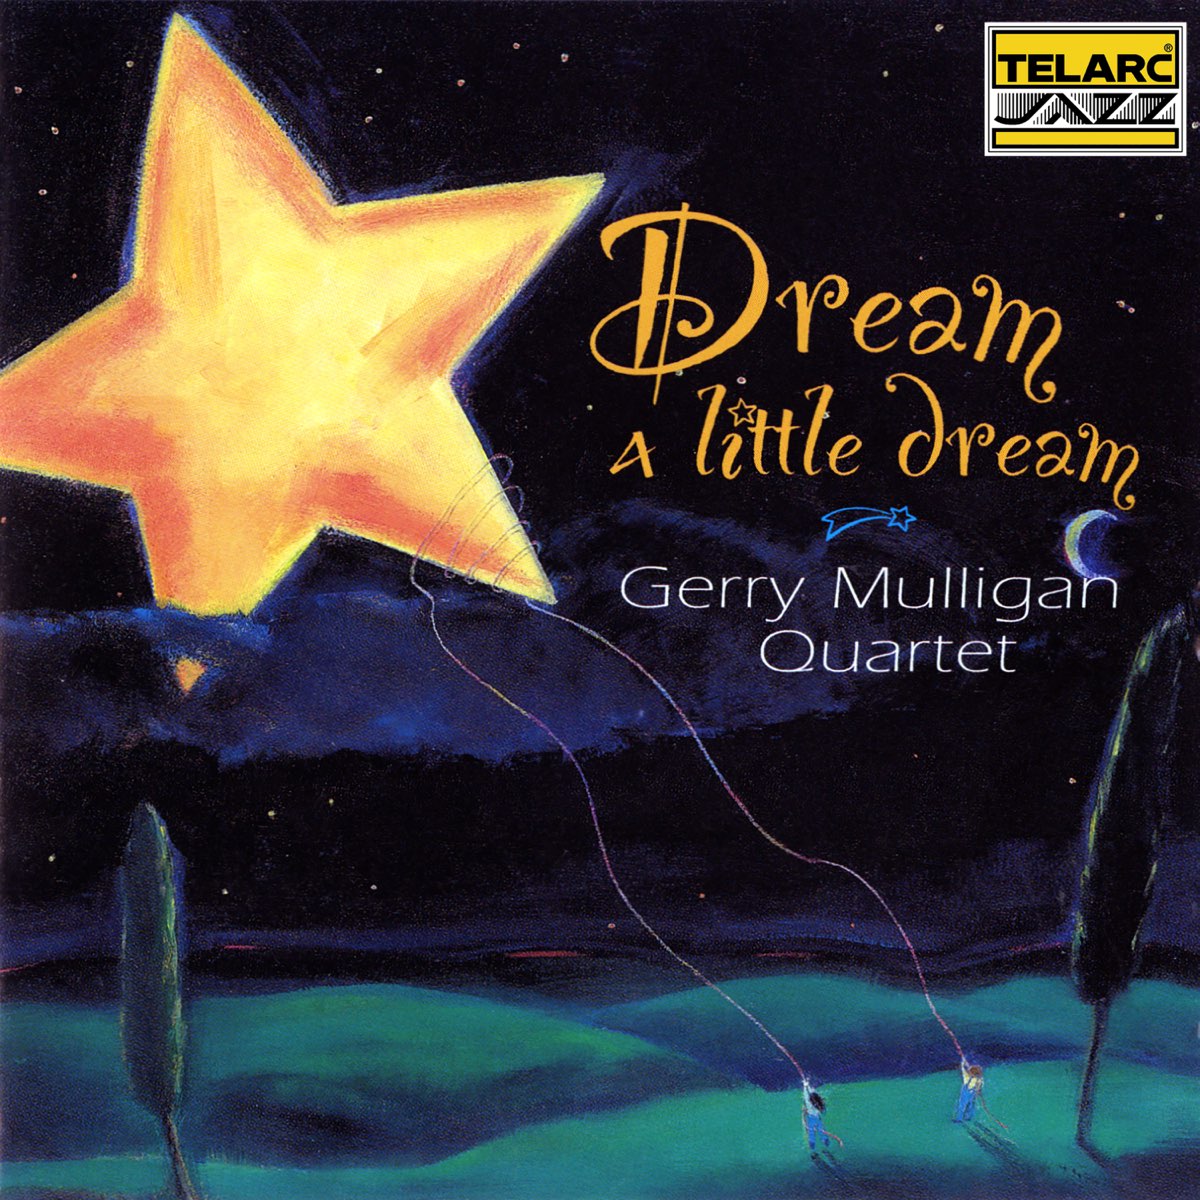 Dream A Little Dream by Gerry Mulligan Quartet on Apple Music